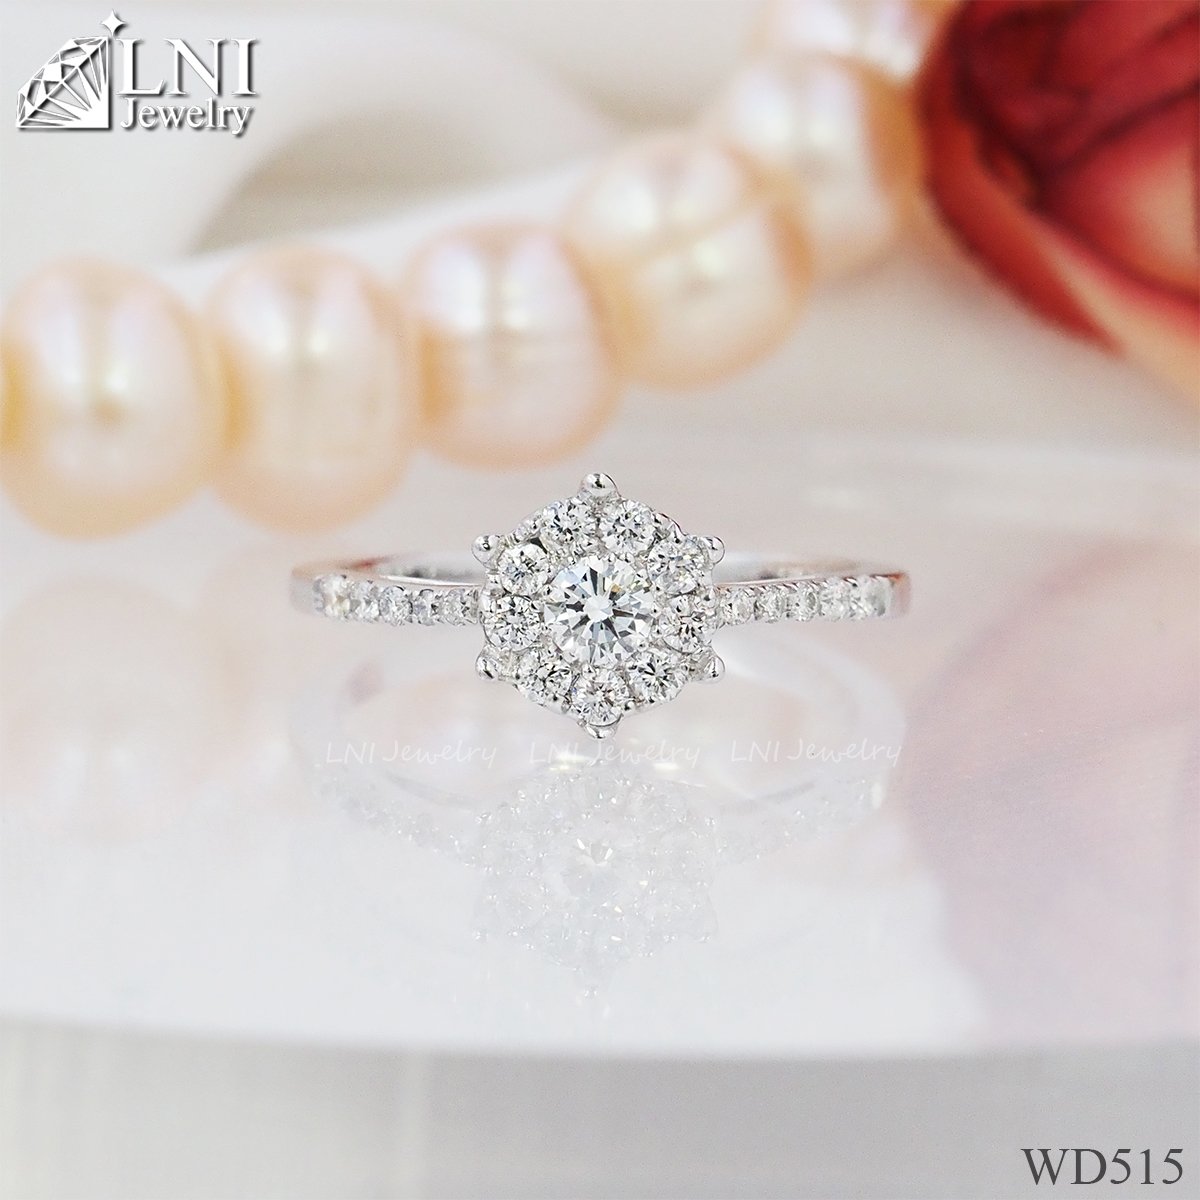 WD515 Halo Diamond Ring